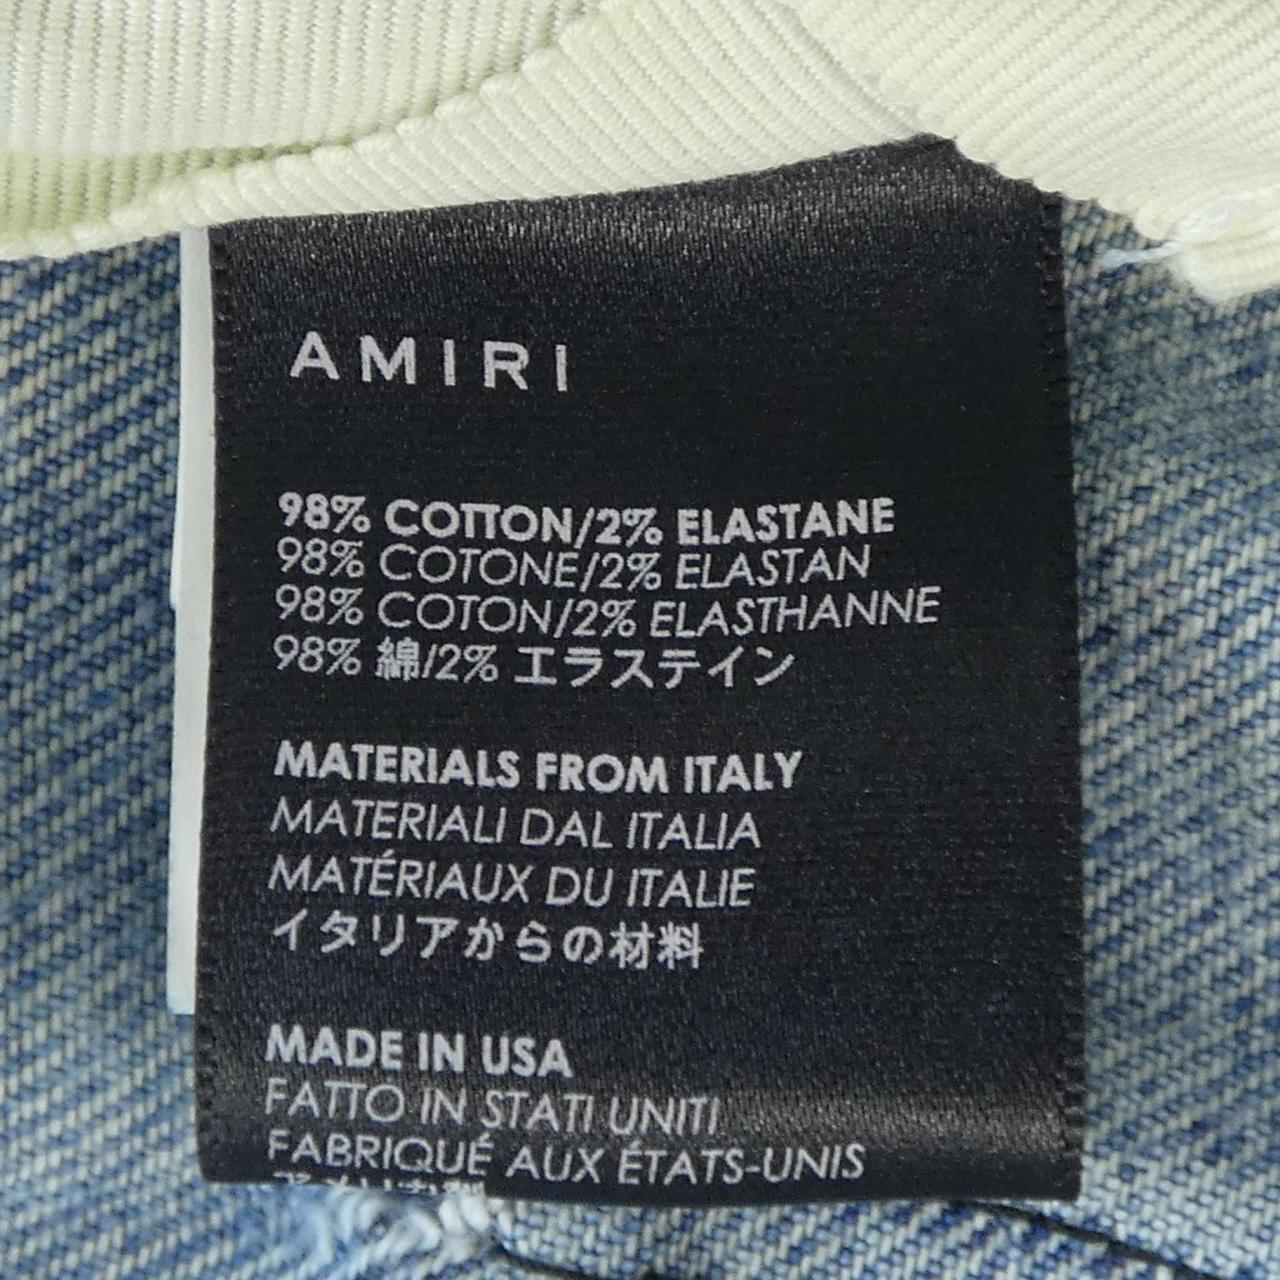 Ami AMIRI短褲